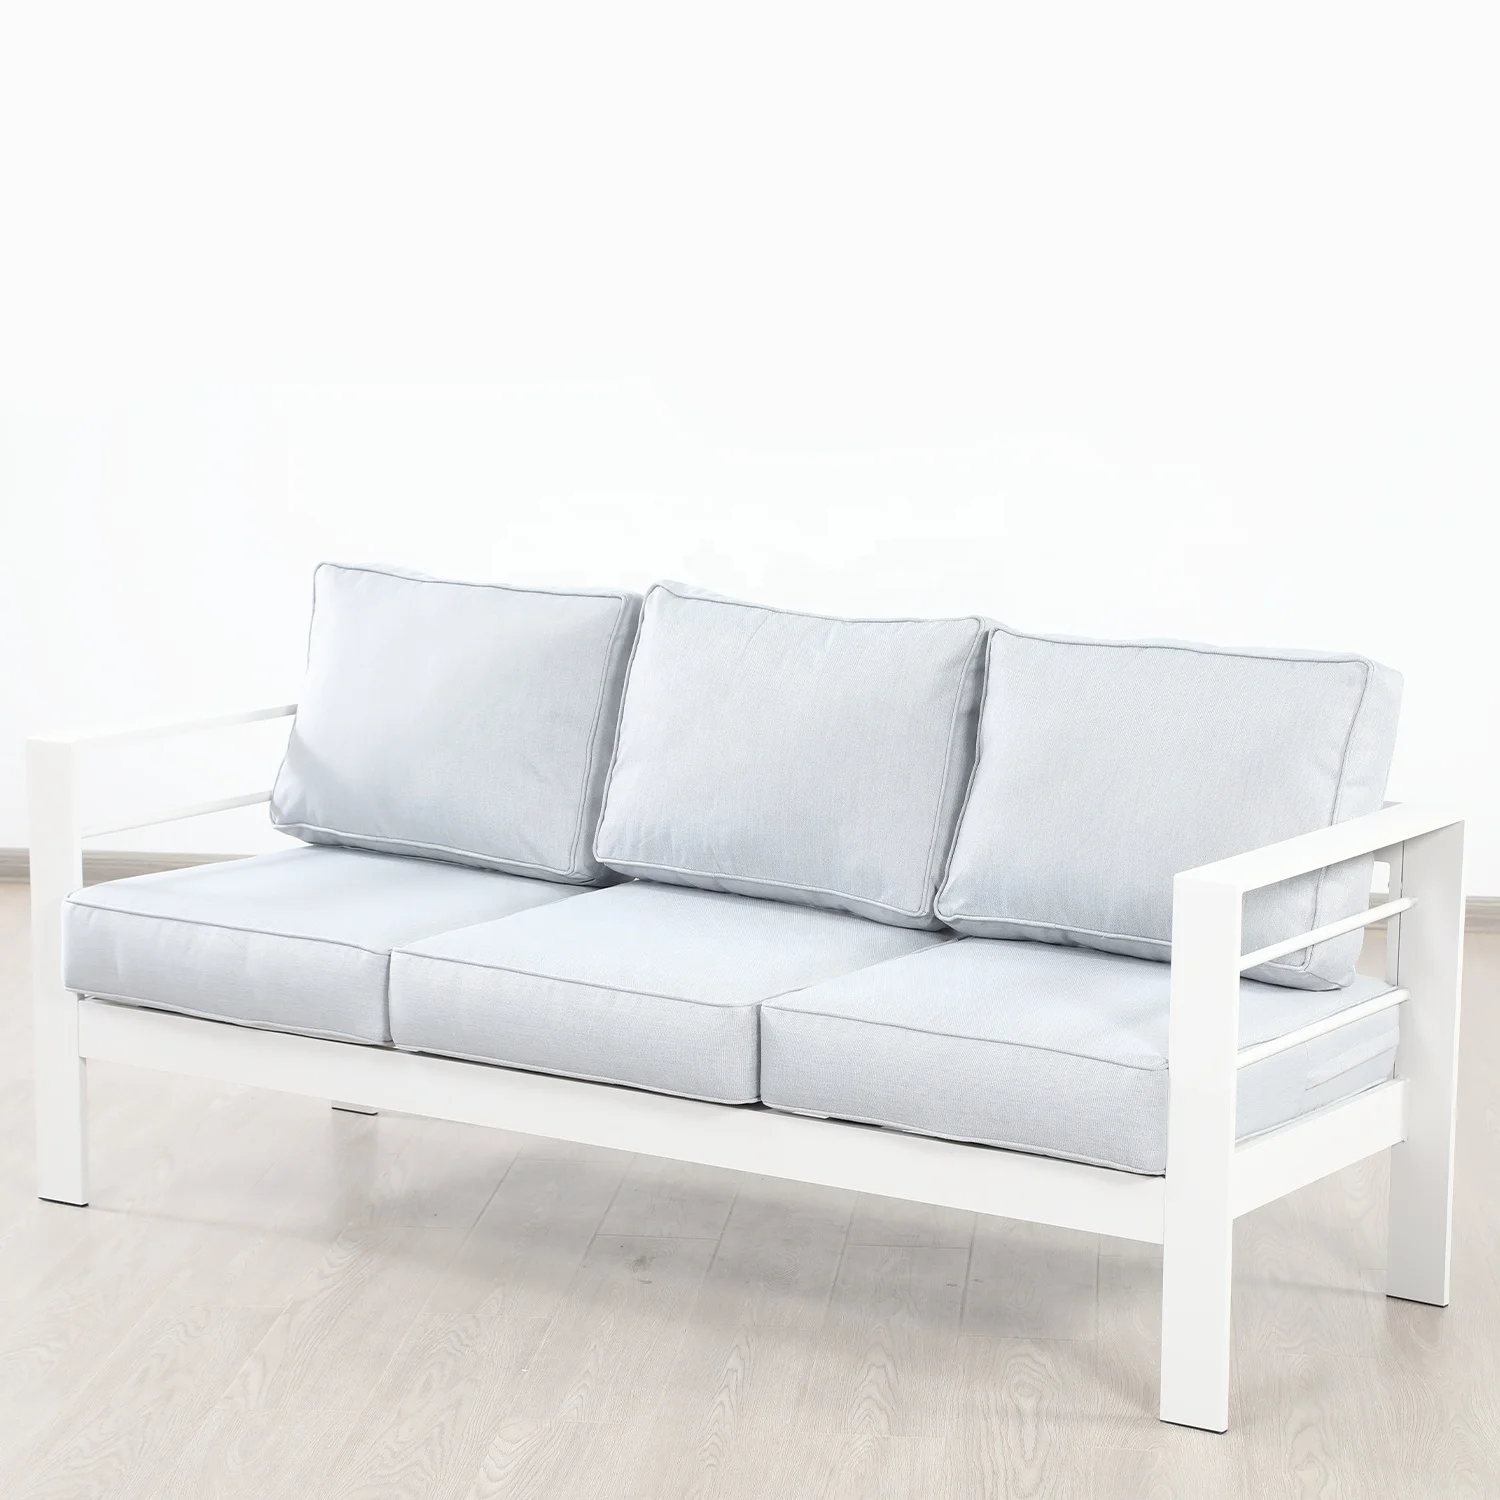 New Coming Ningbo Outdoor Sofa Set Elegant Aluminum Style Outside Garden Patio Furniture